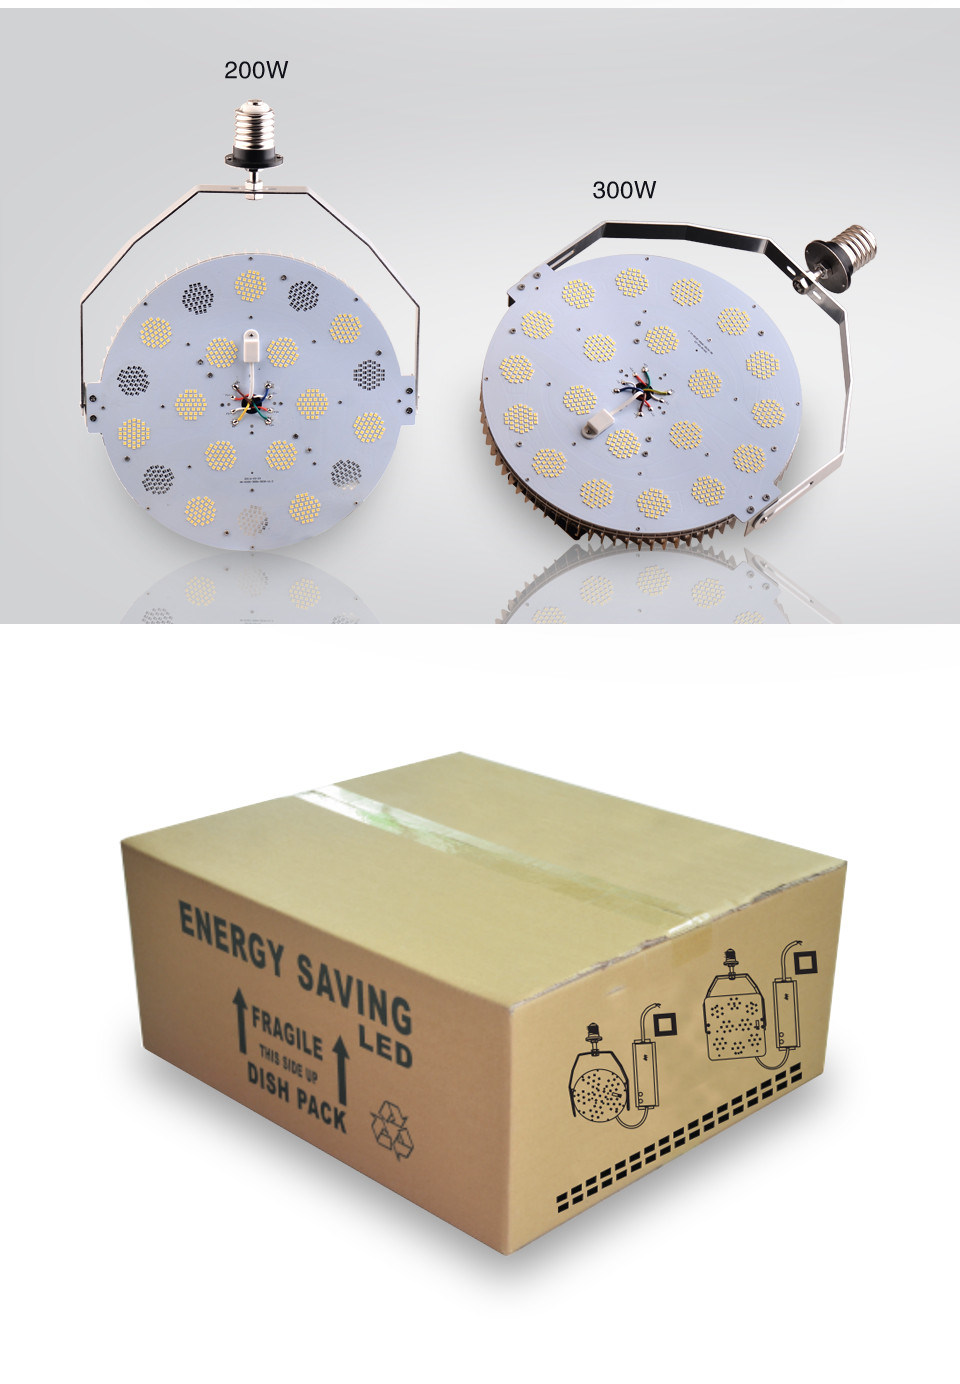 Dlc Listed Outdoor Lighting 120 Watt E40 LED Street Light Bulb with Dimmable